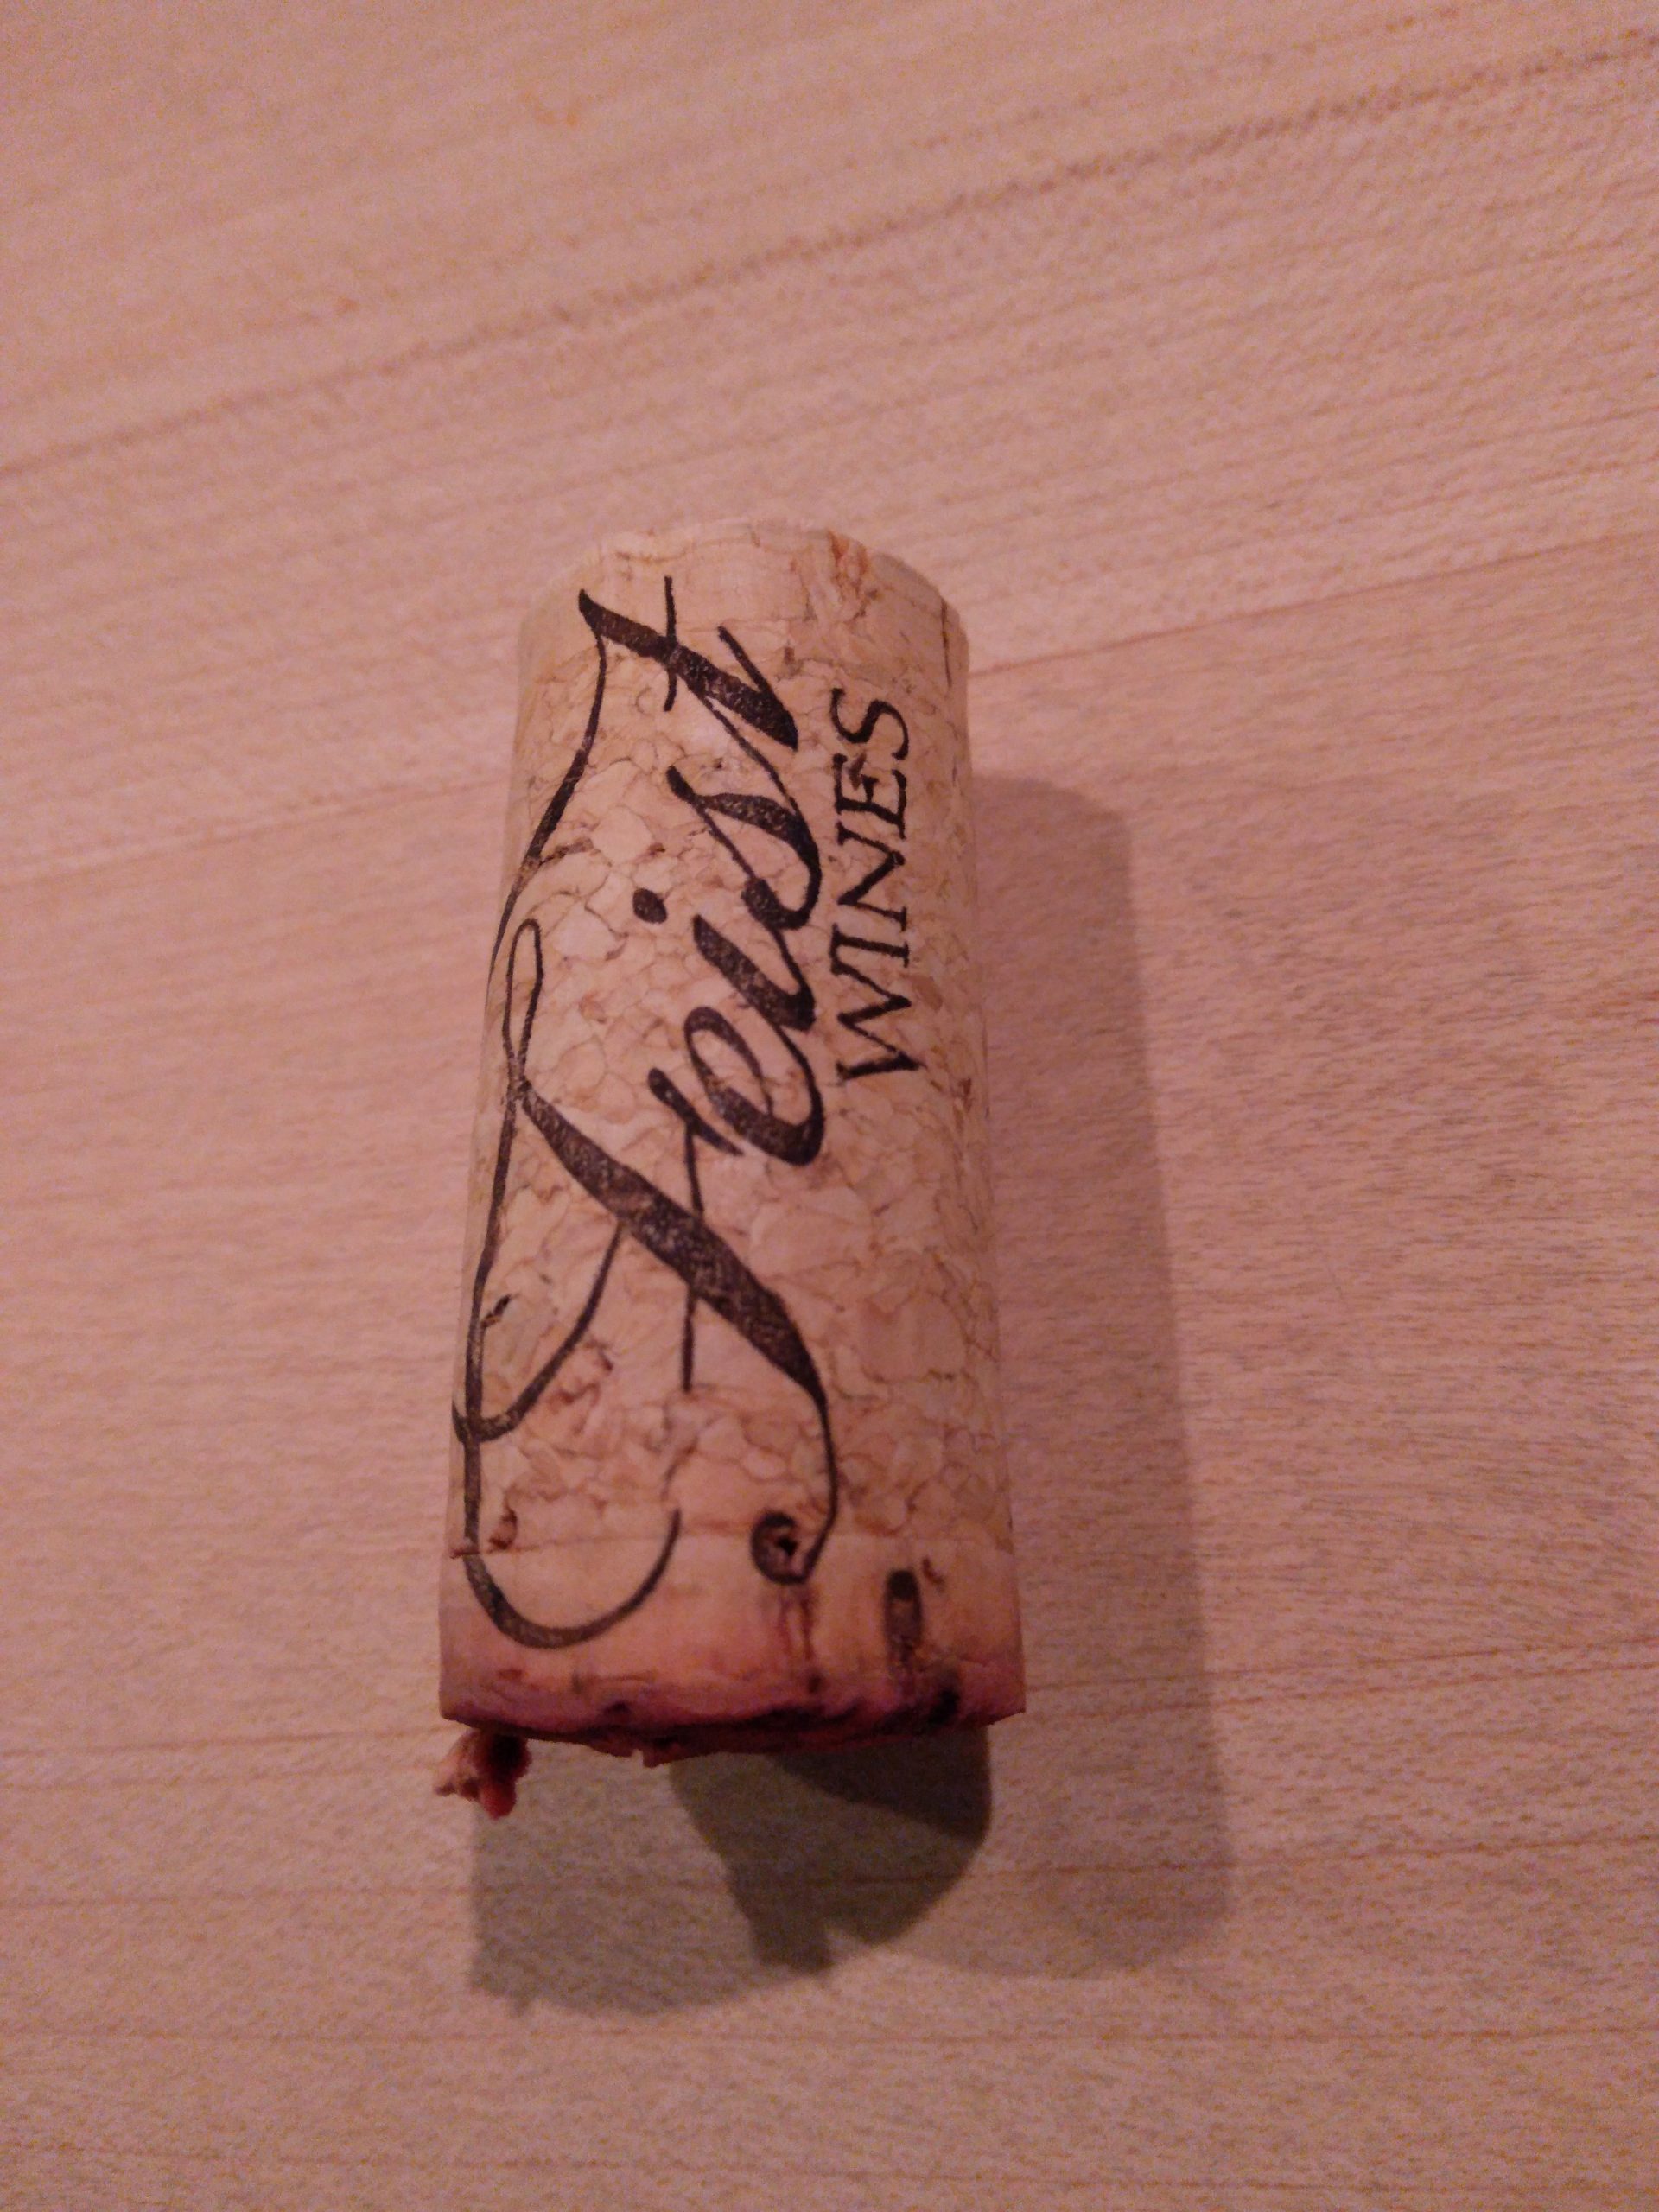 Feist Wines feisty wine bottle cork